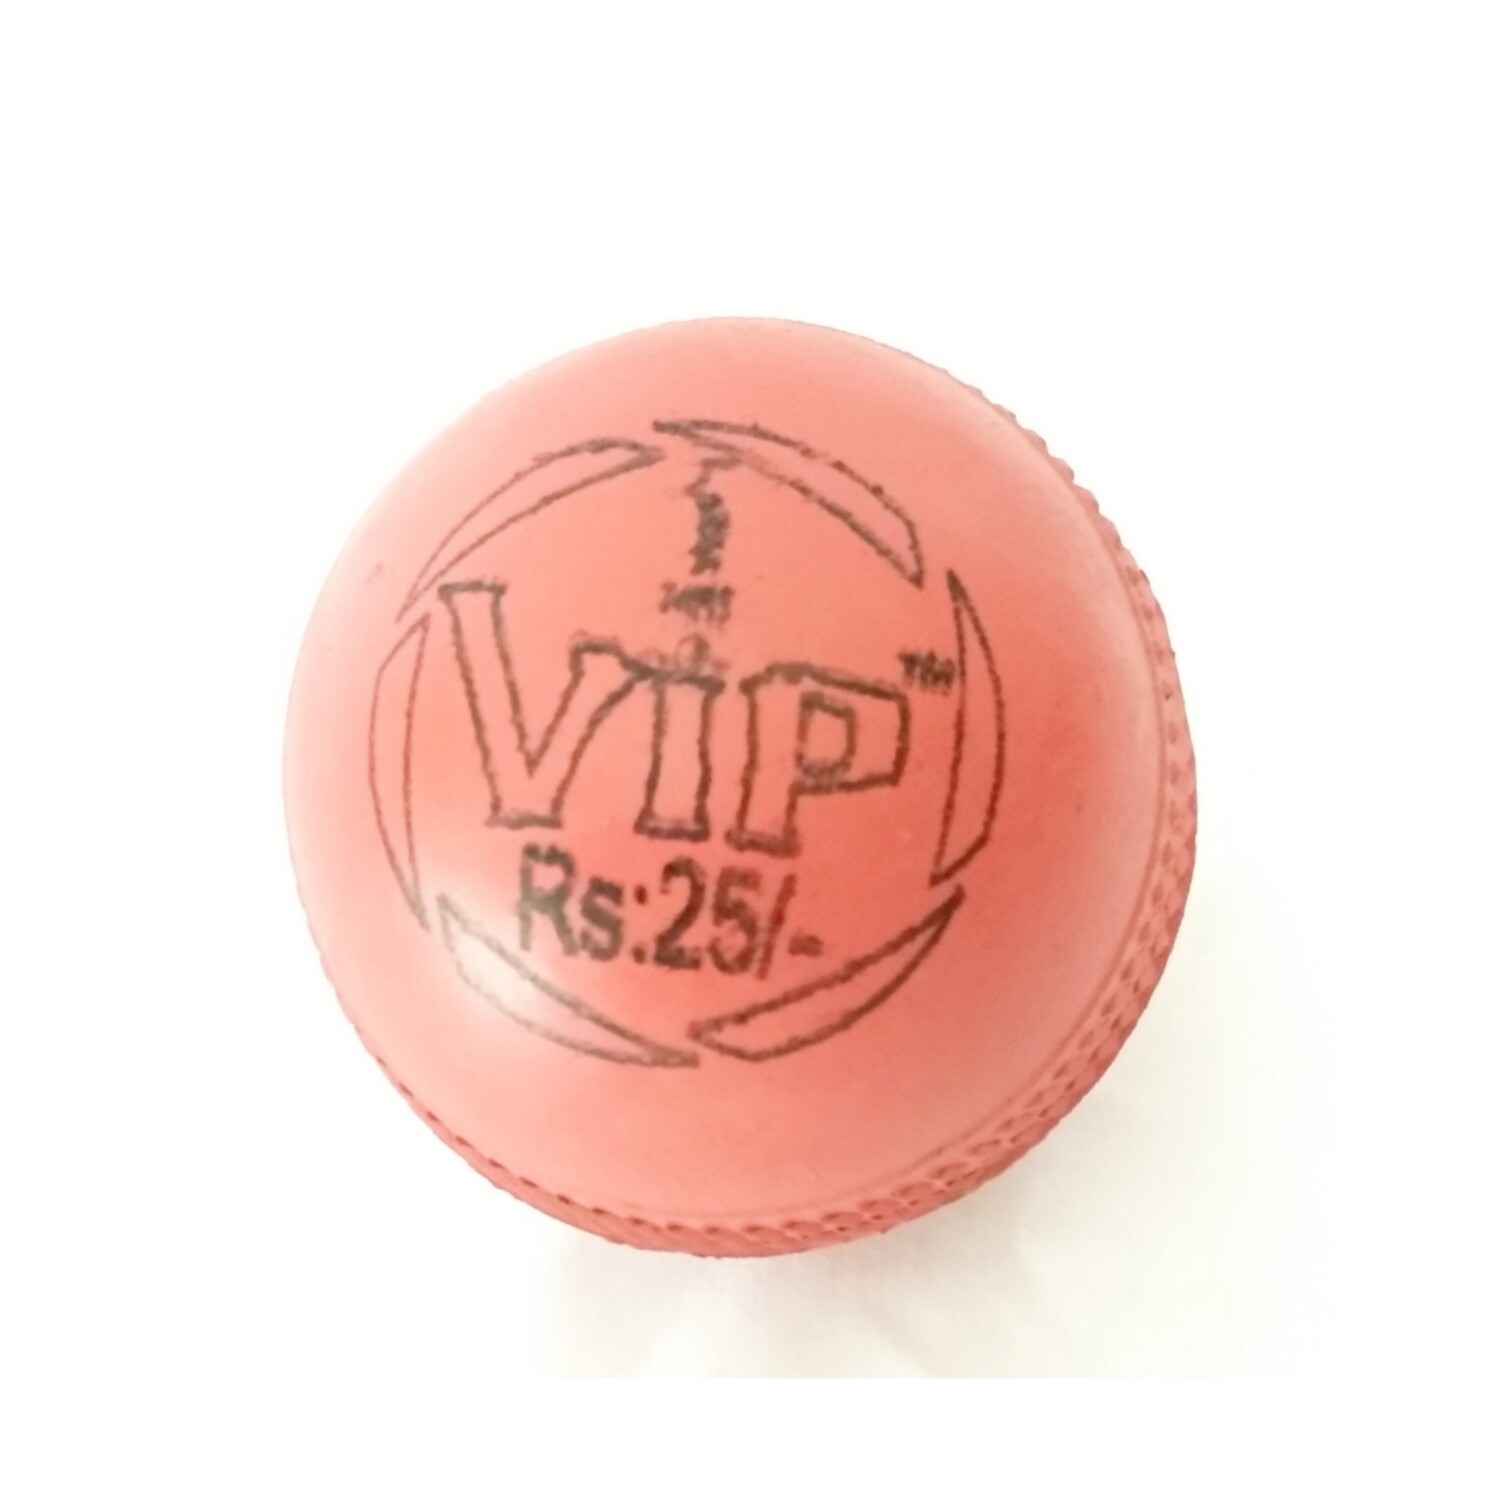 MRI VIP Supreme Quality Sport Play Rubber Ball/Heavy Cricket Wind Ball  (Multicolour) - Set of 2